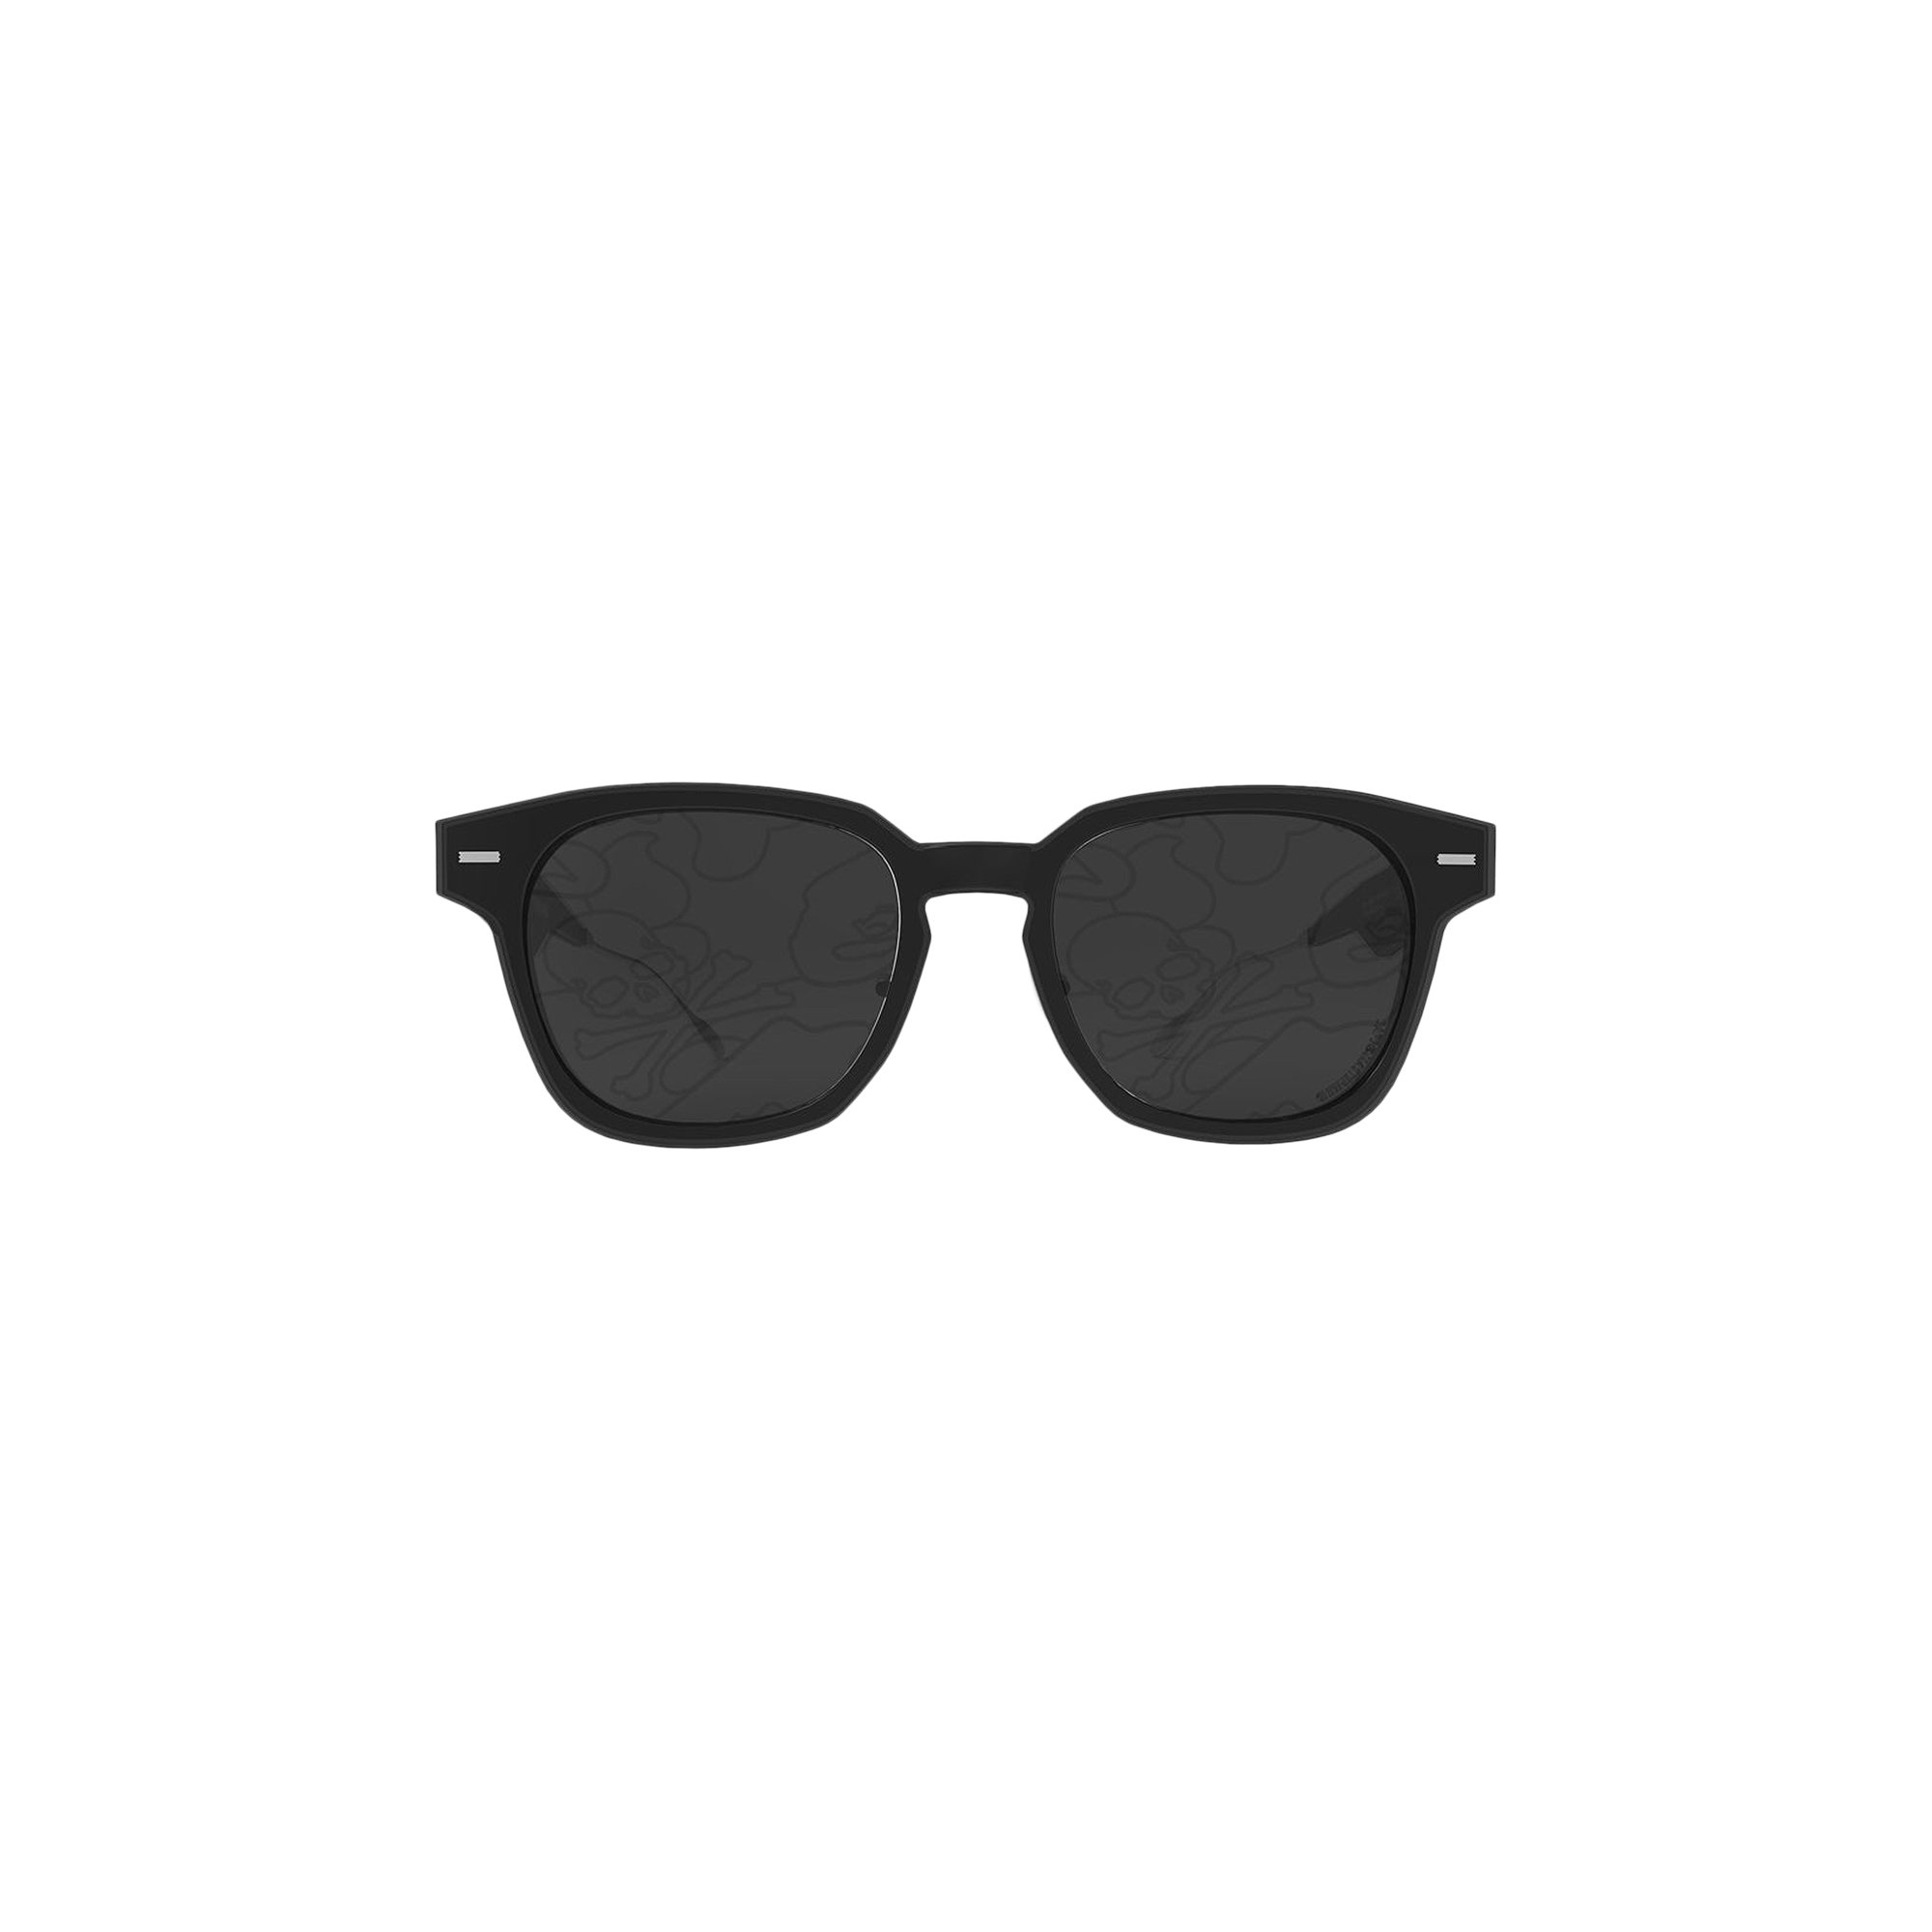 BAPE x MMJ 3 Sunglasses 'Black'